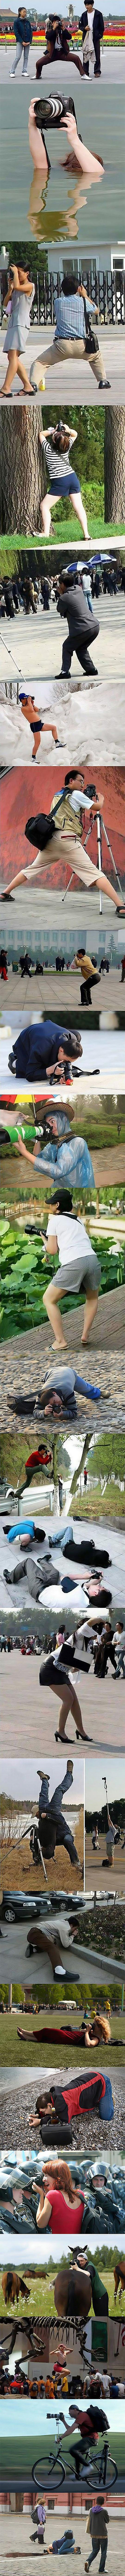 Suddenly a wild photographer appears!